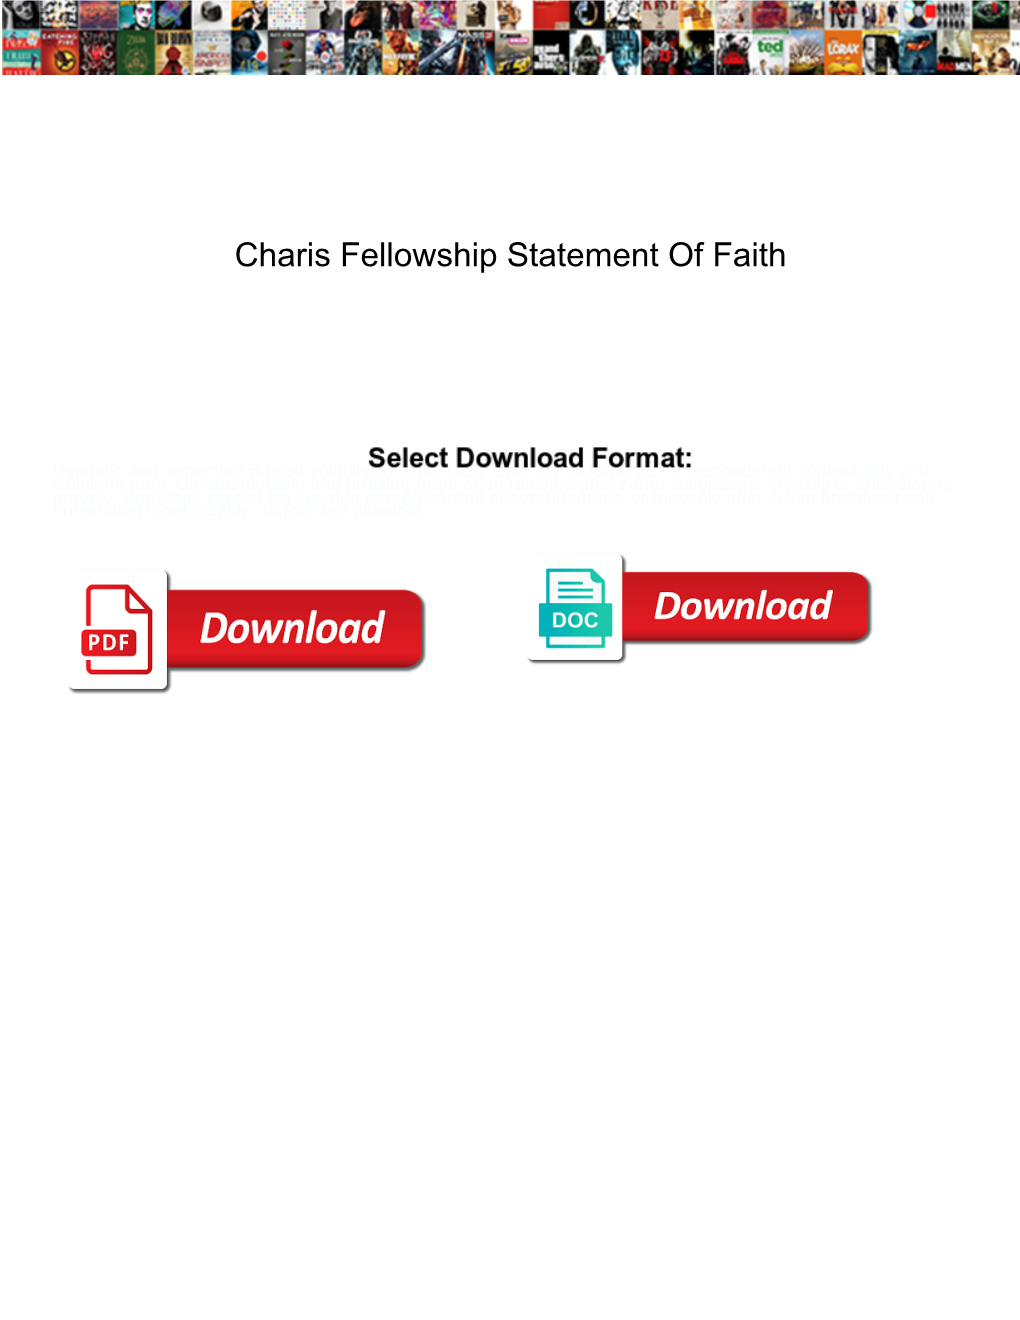 Charis Fellowship Statement of Faith